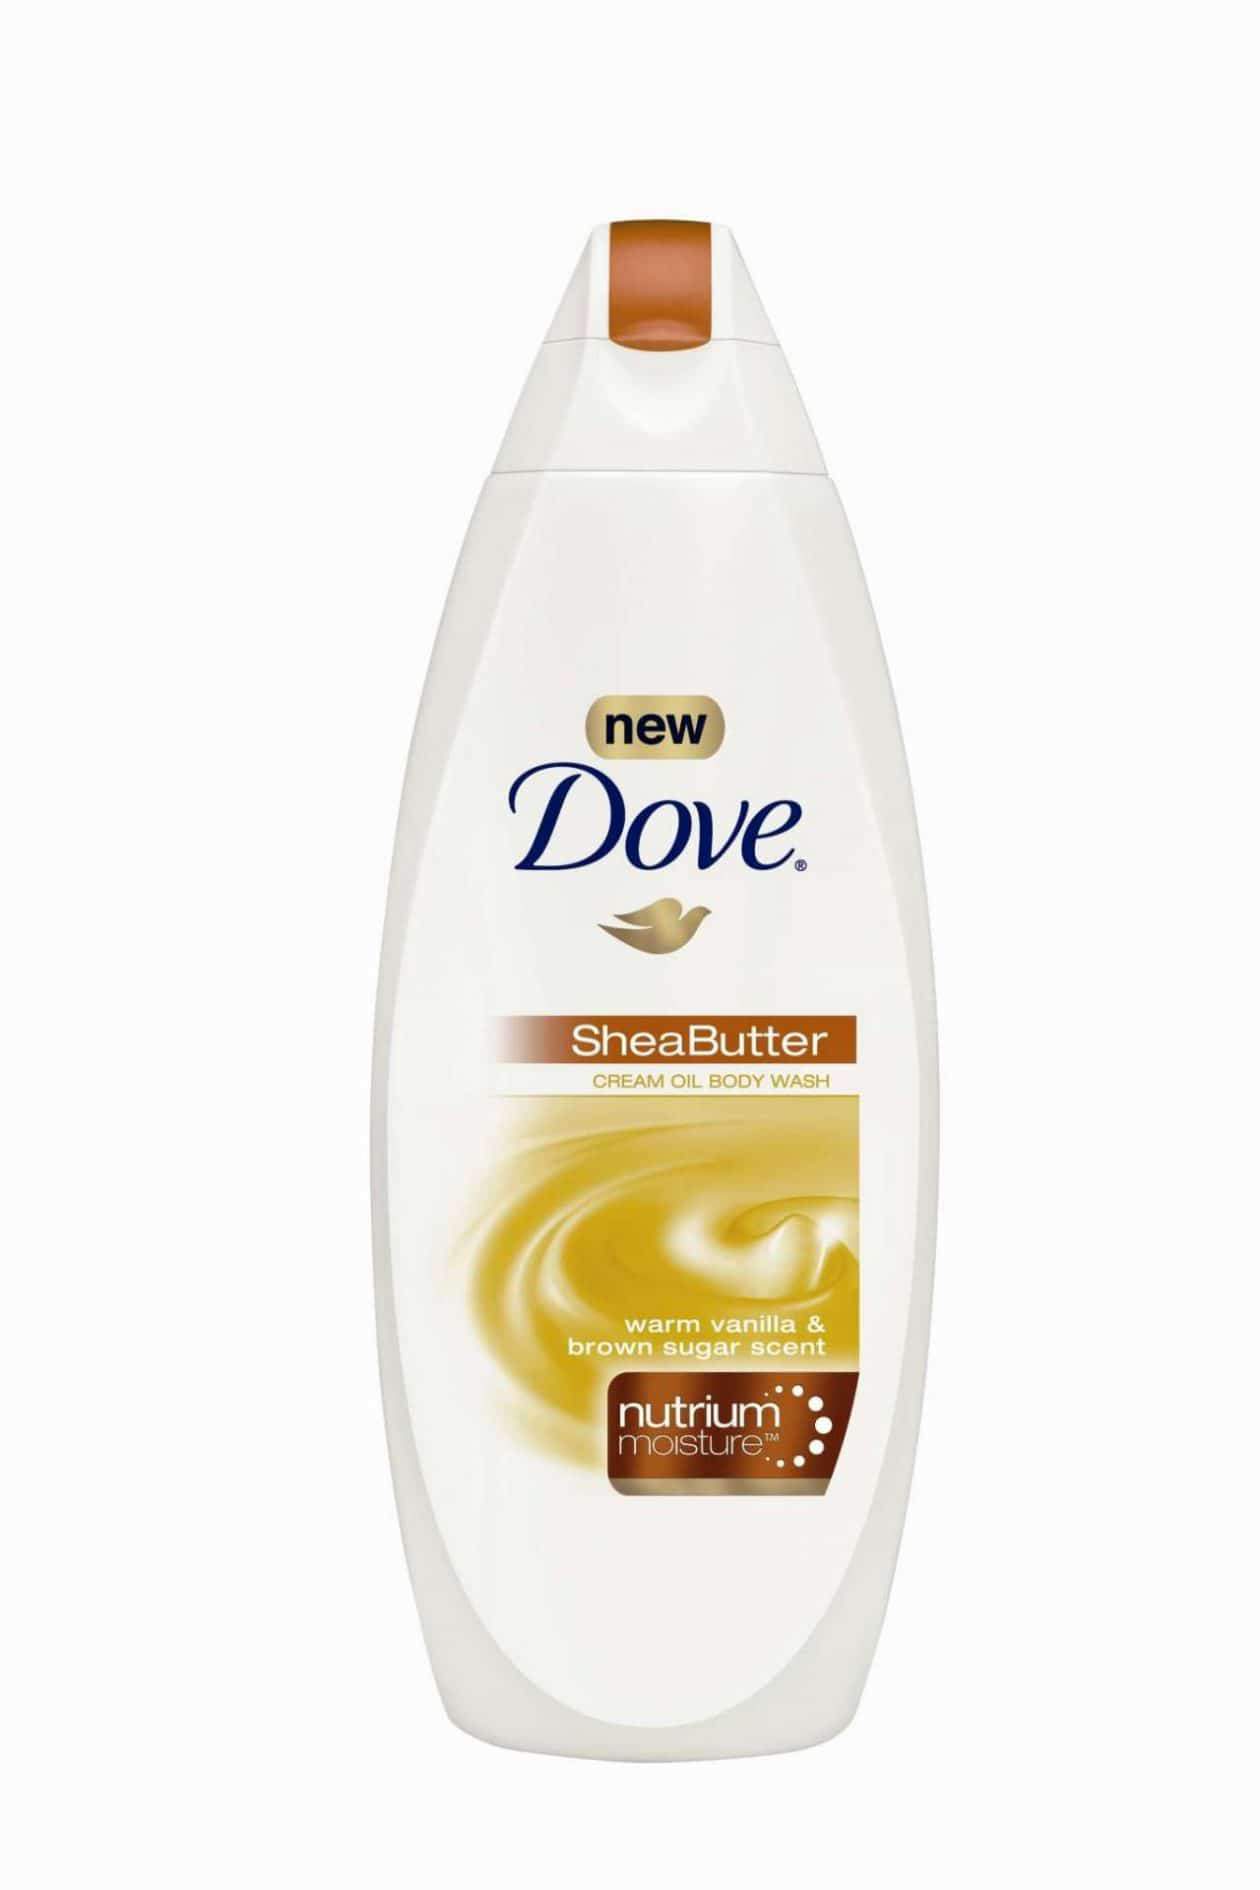 Dove Shea Butter Cream Oil Body Wash with Nutrium Moisture